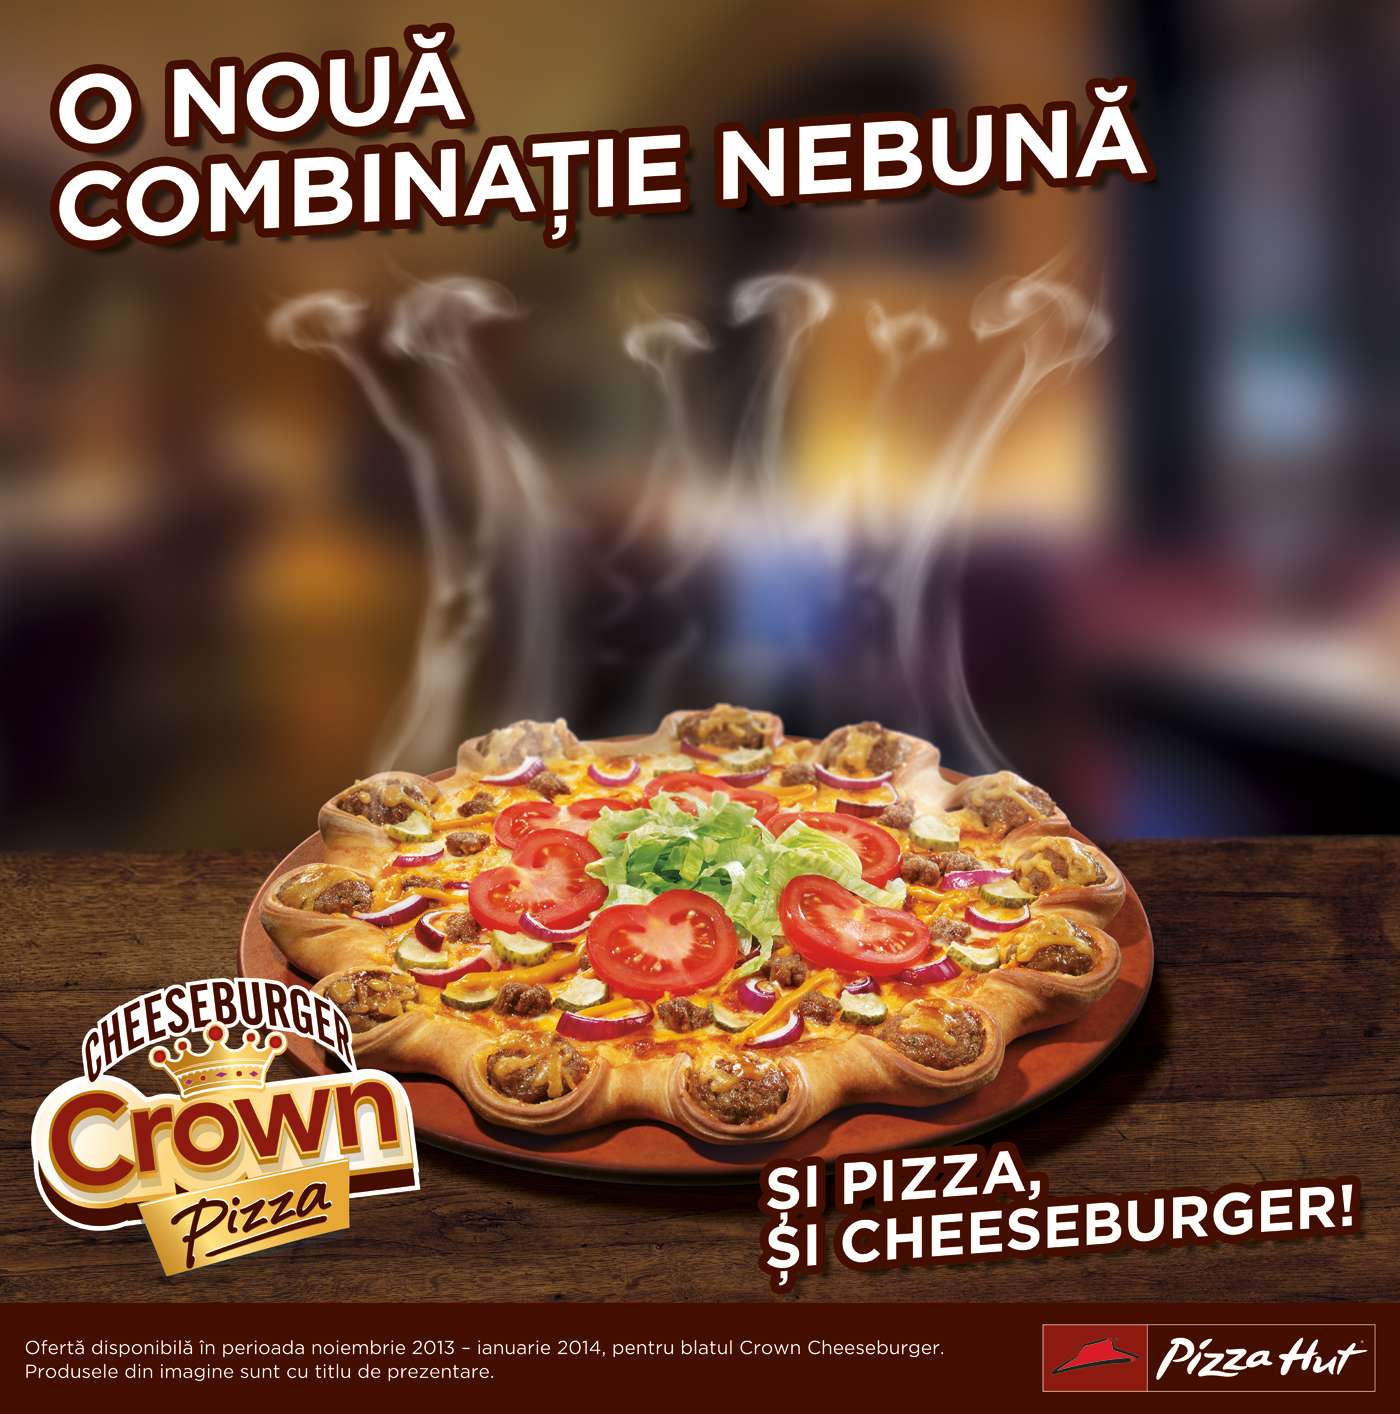 Crown Cheeseburger Pizza Hut